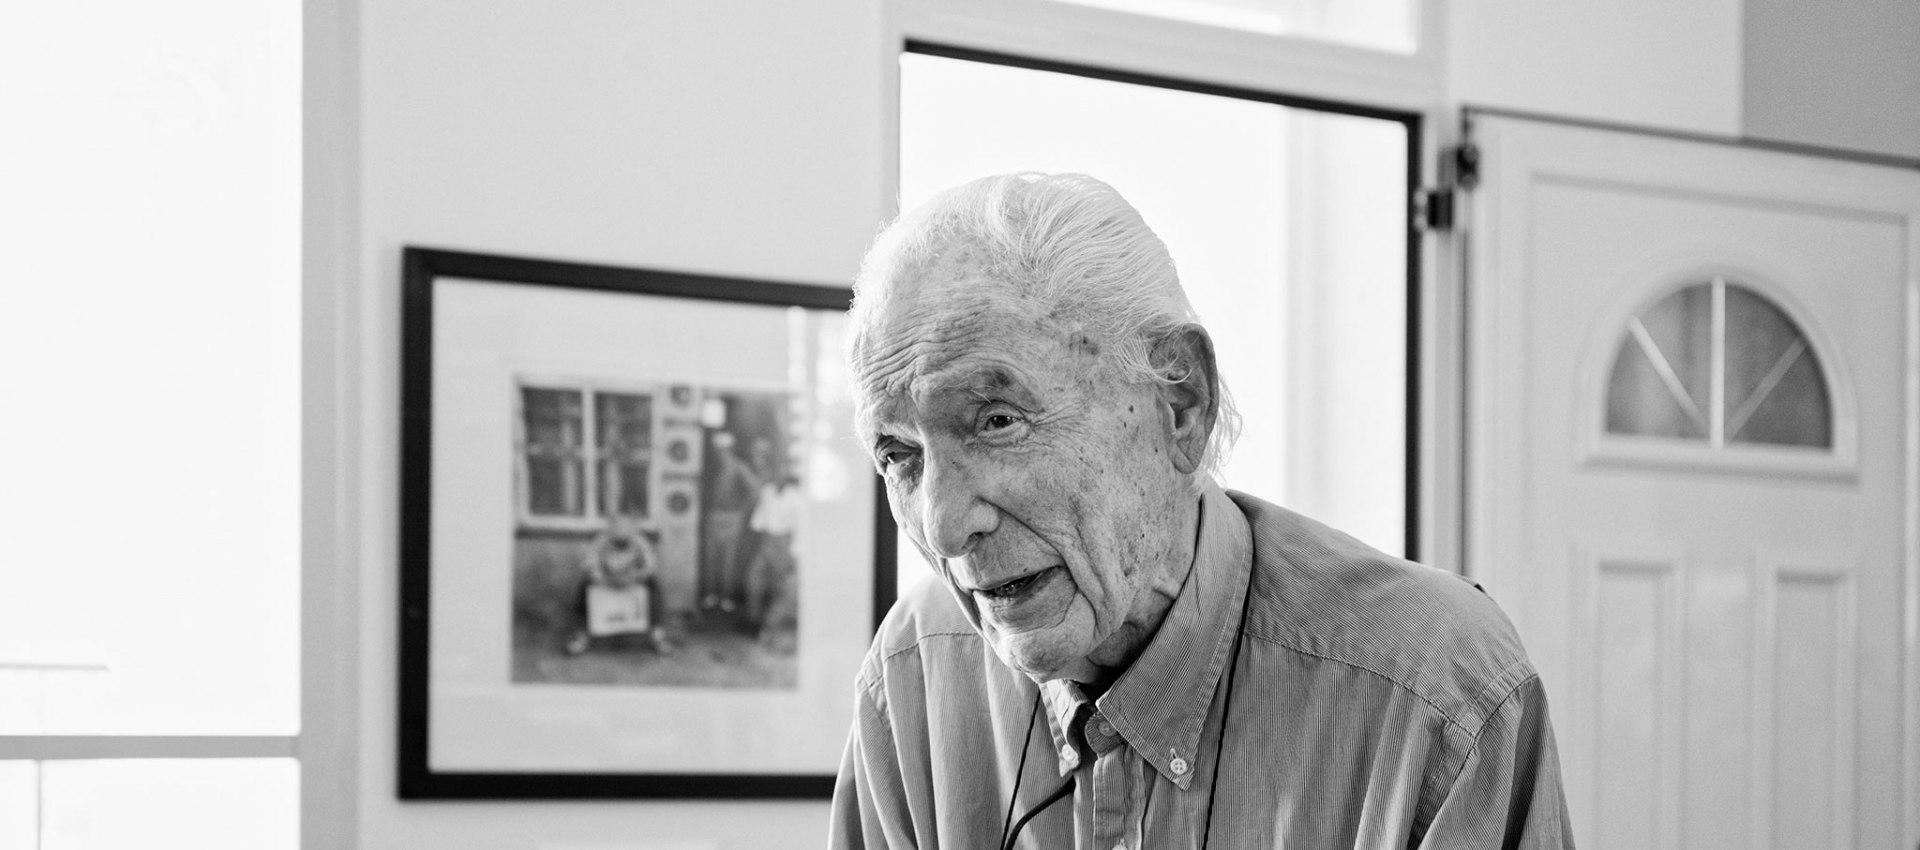 Jürgen Schadeberg pass away, a mythical photographic legacy | The ...